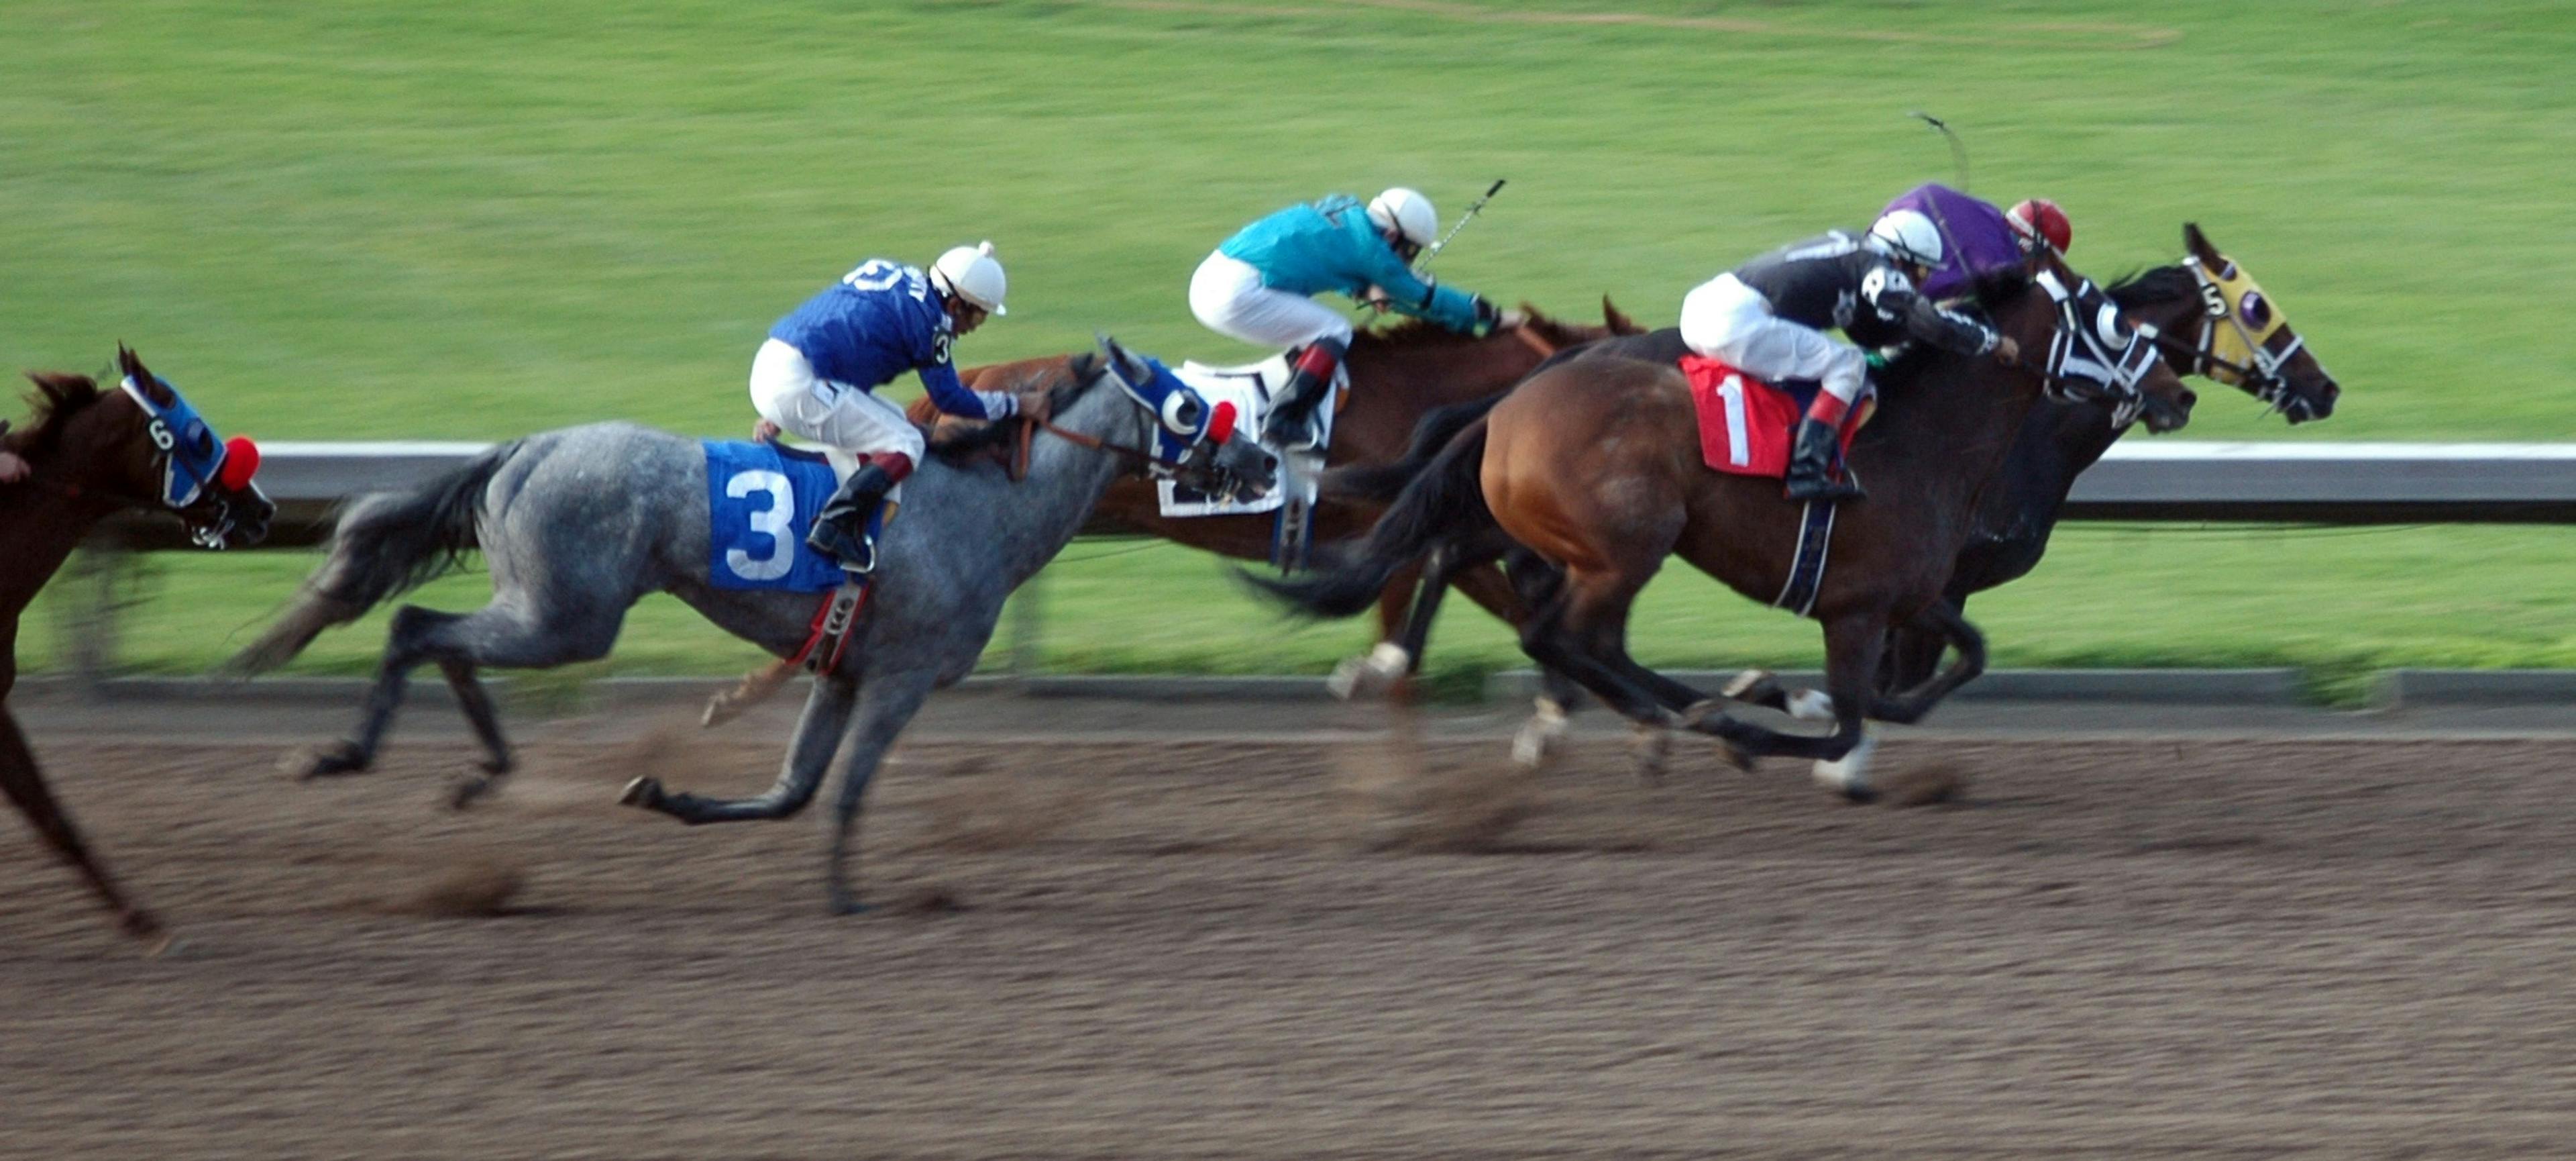 racehorses running on track